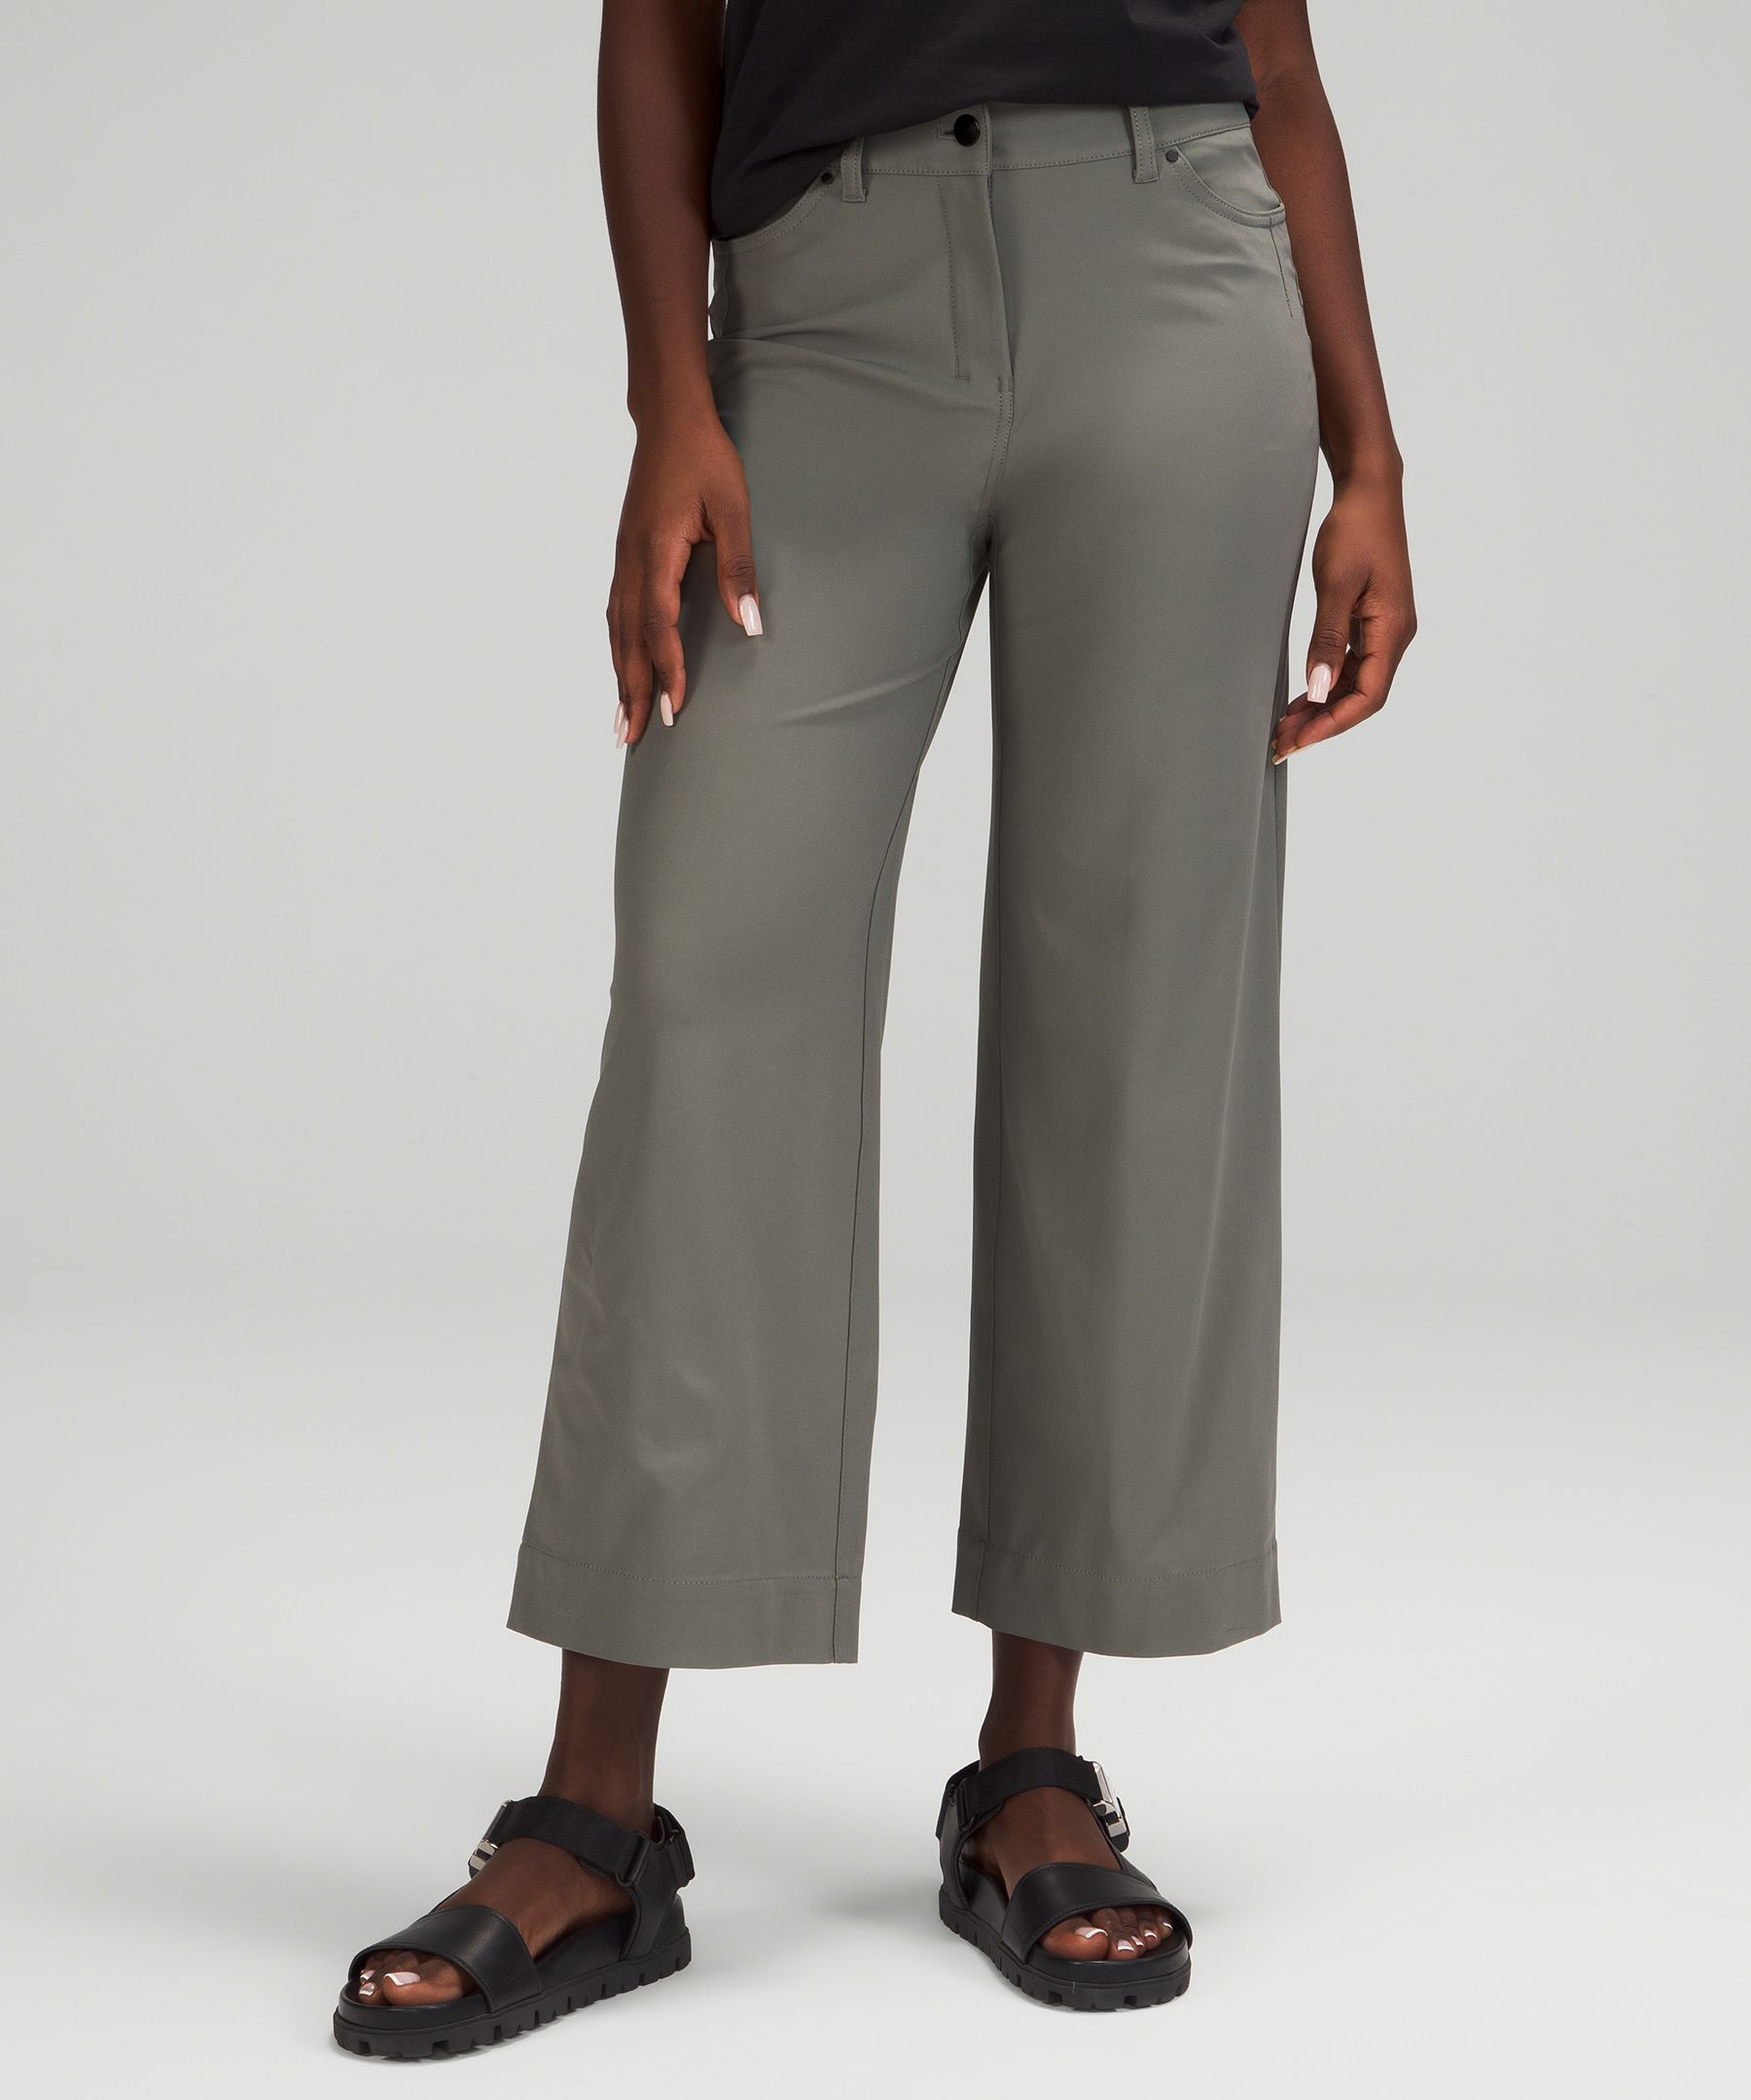 Lululemon - City Sleek 5 Pocket Wide-Leg High Rise 7/8 Length Pant